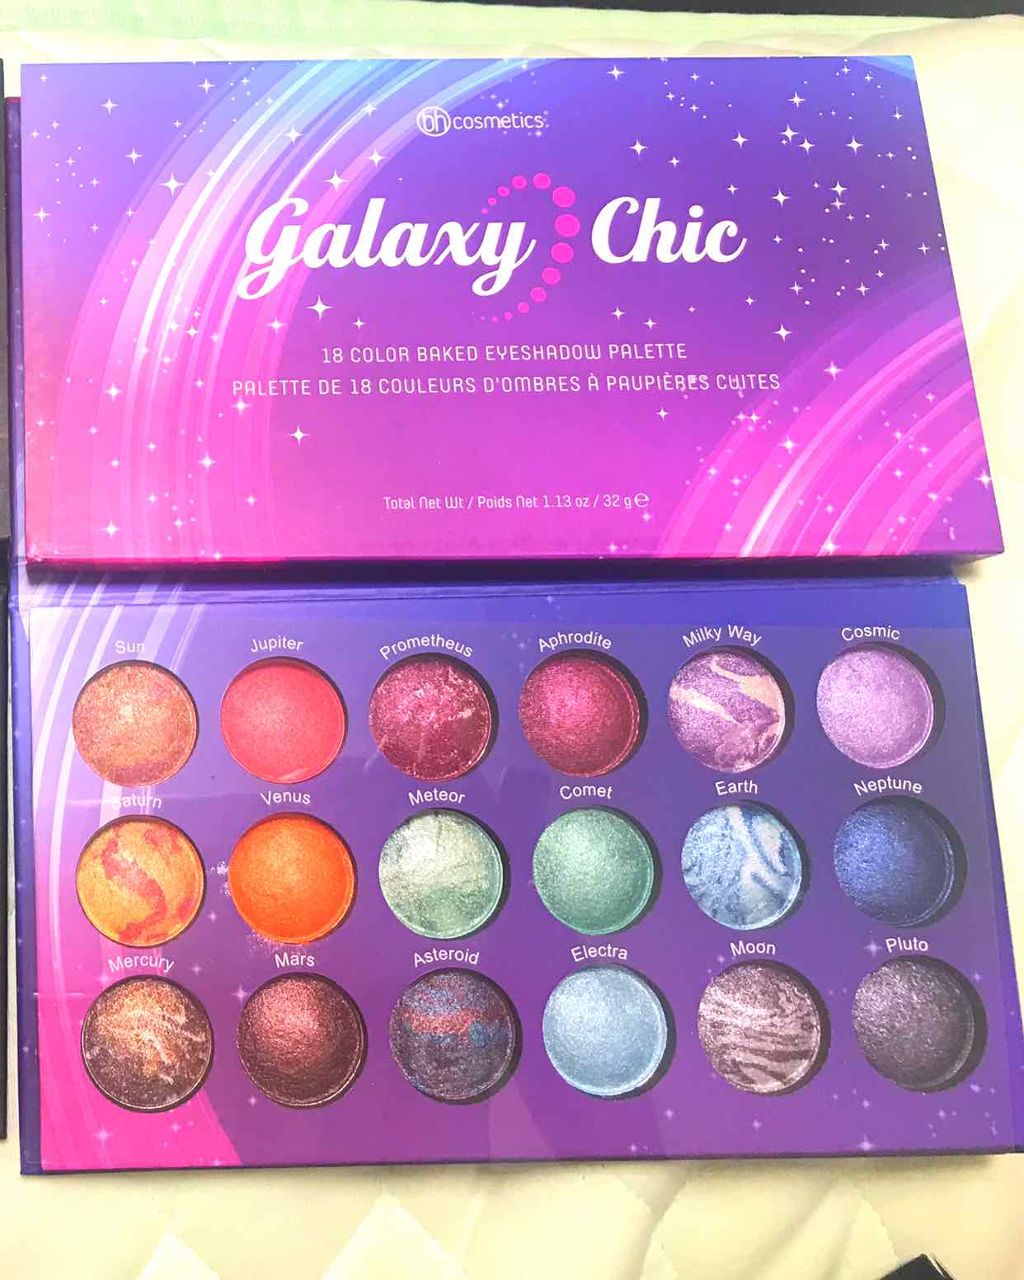 Galaxy Chic Baked Eyeshadow Palette｜bh cosmeticsの口コミ -  宇宙や星座のモチーフが大好きなのと、日本で by 刹那*(普通肌) | LIPS